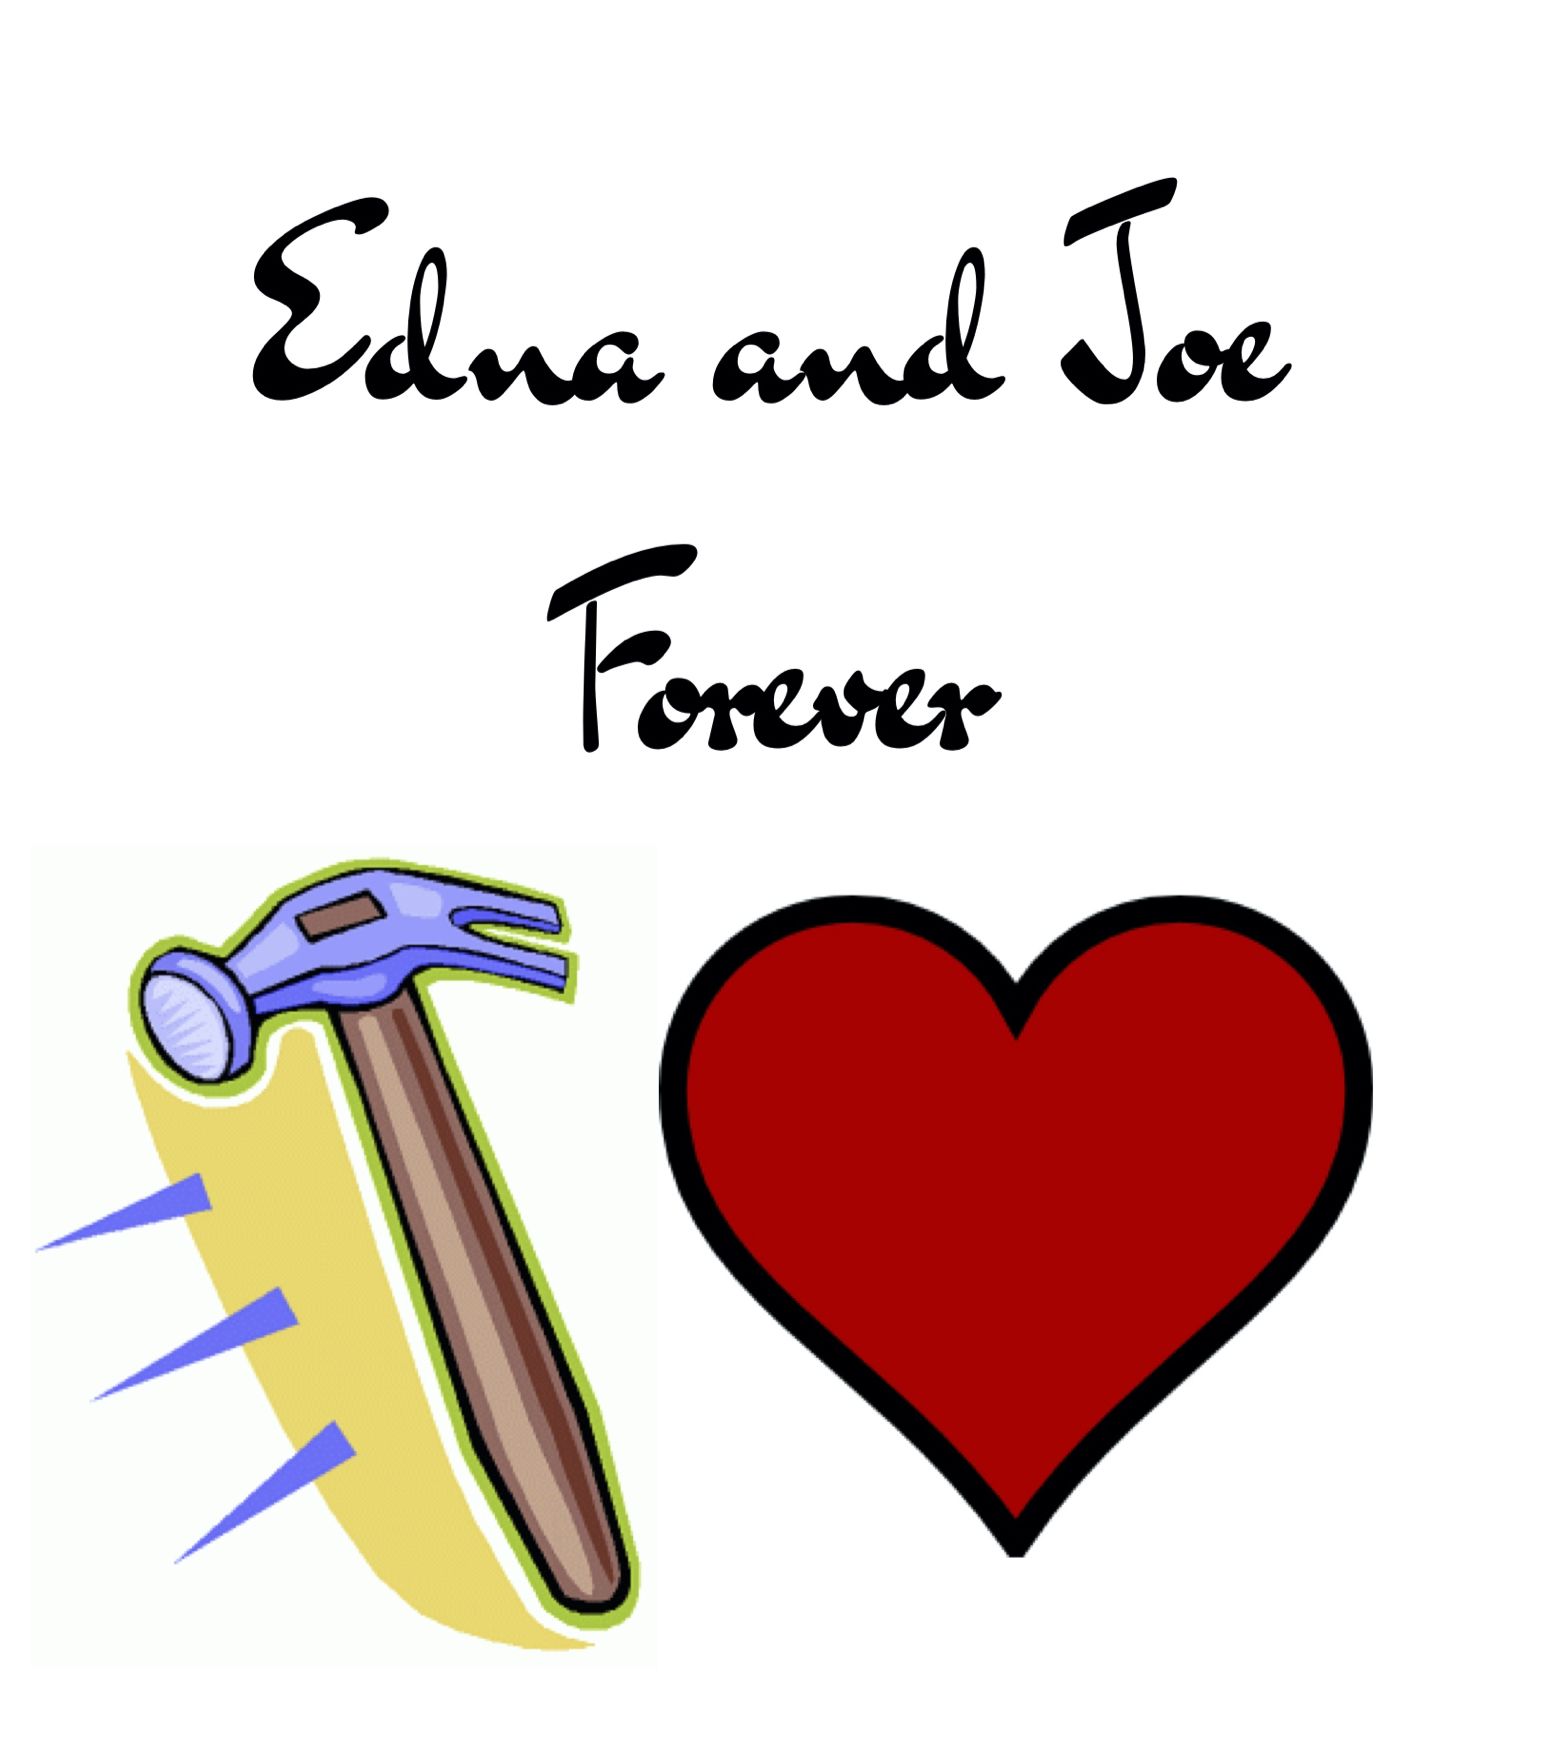 Edna and Joe poster